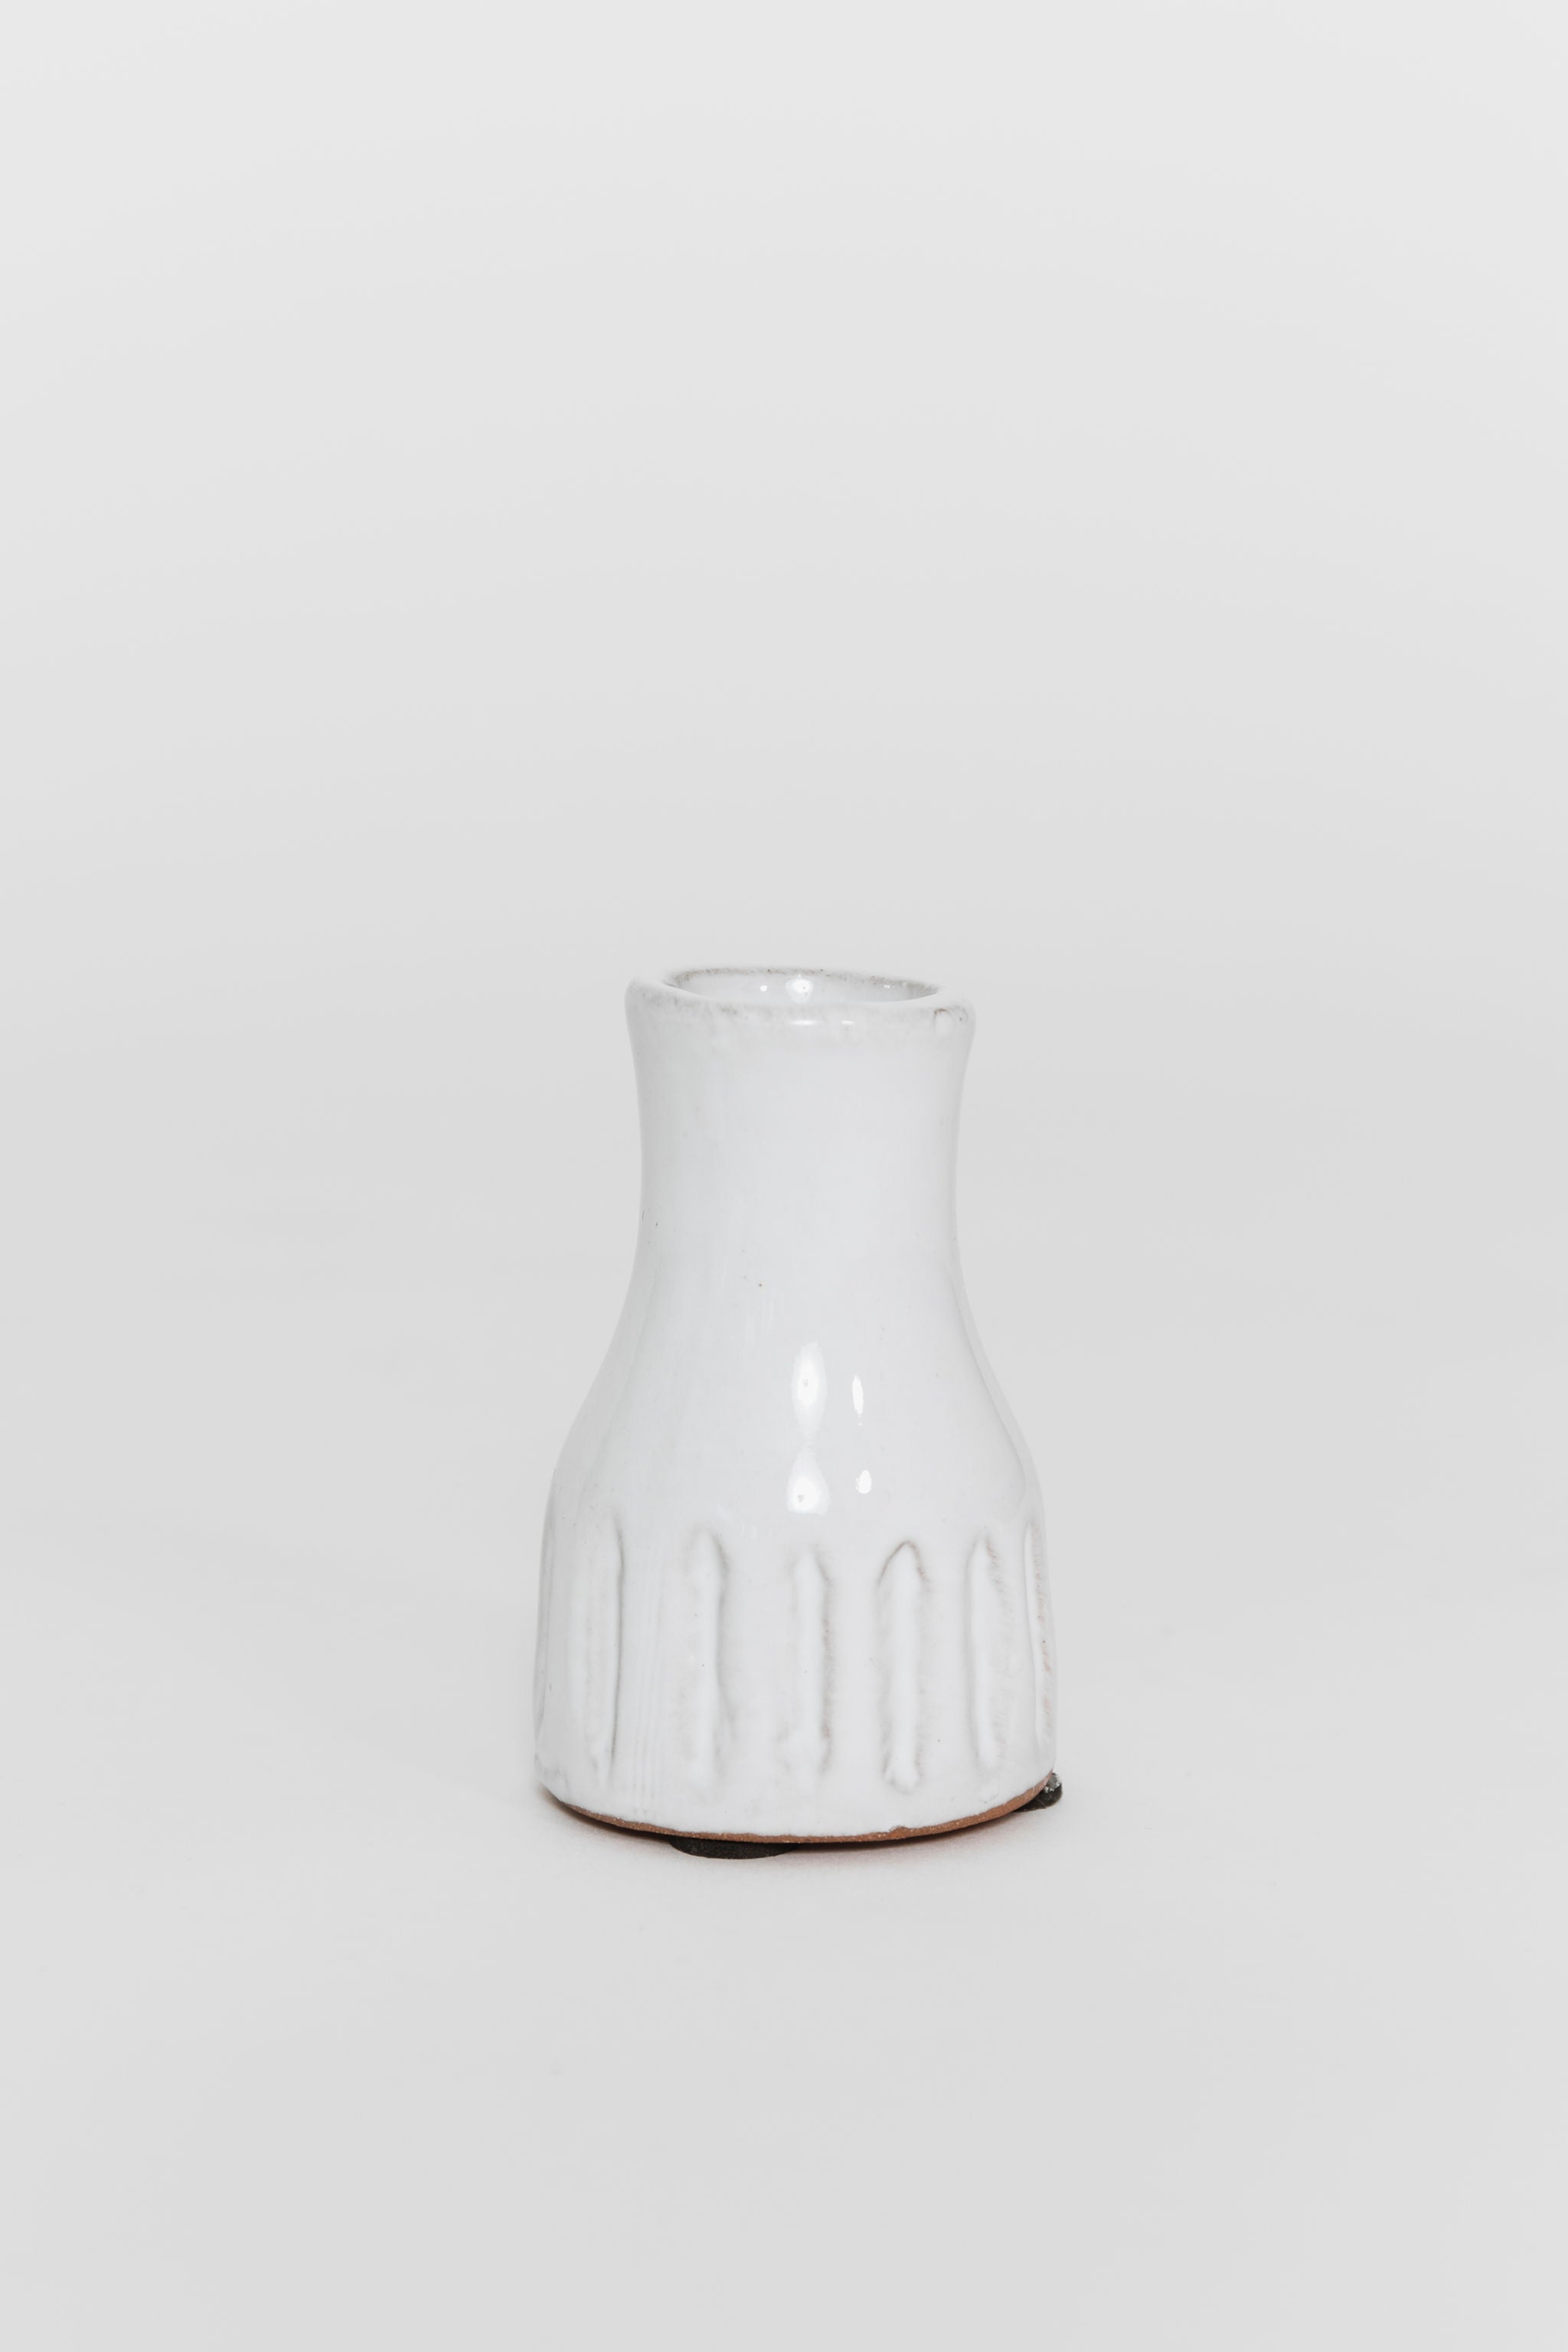 Terra Cotta Vases- White